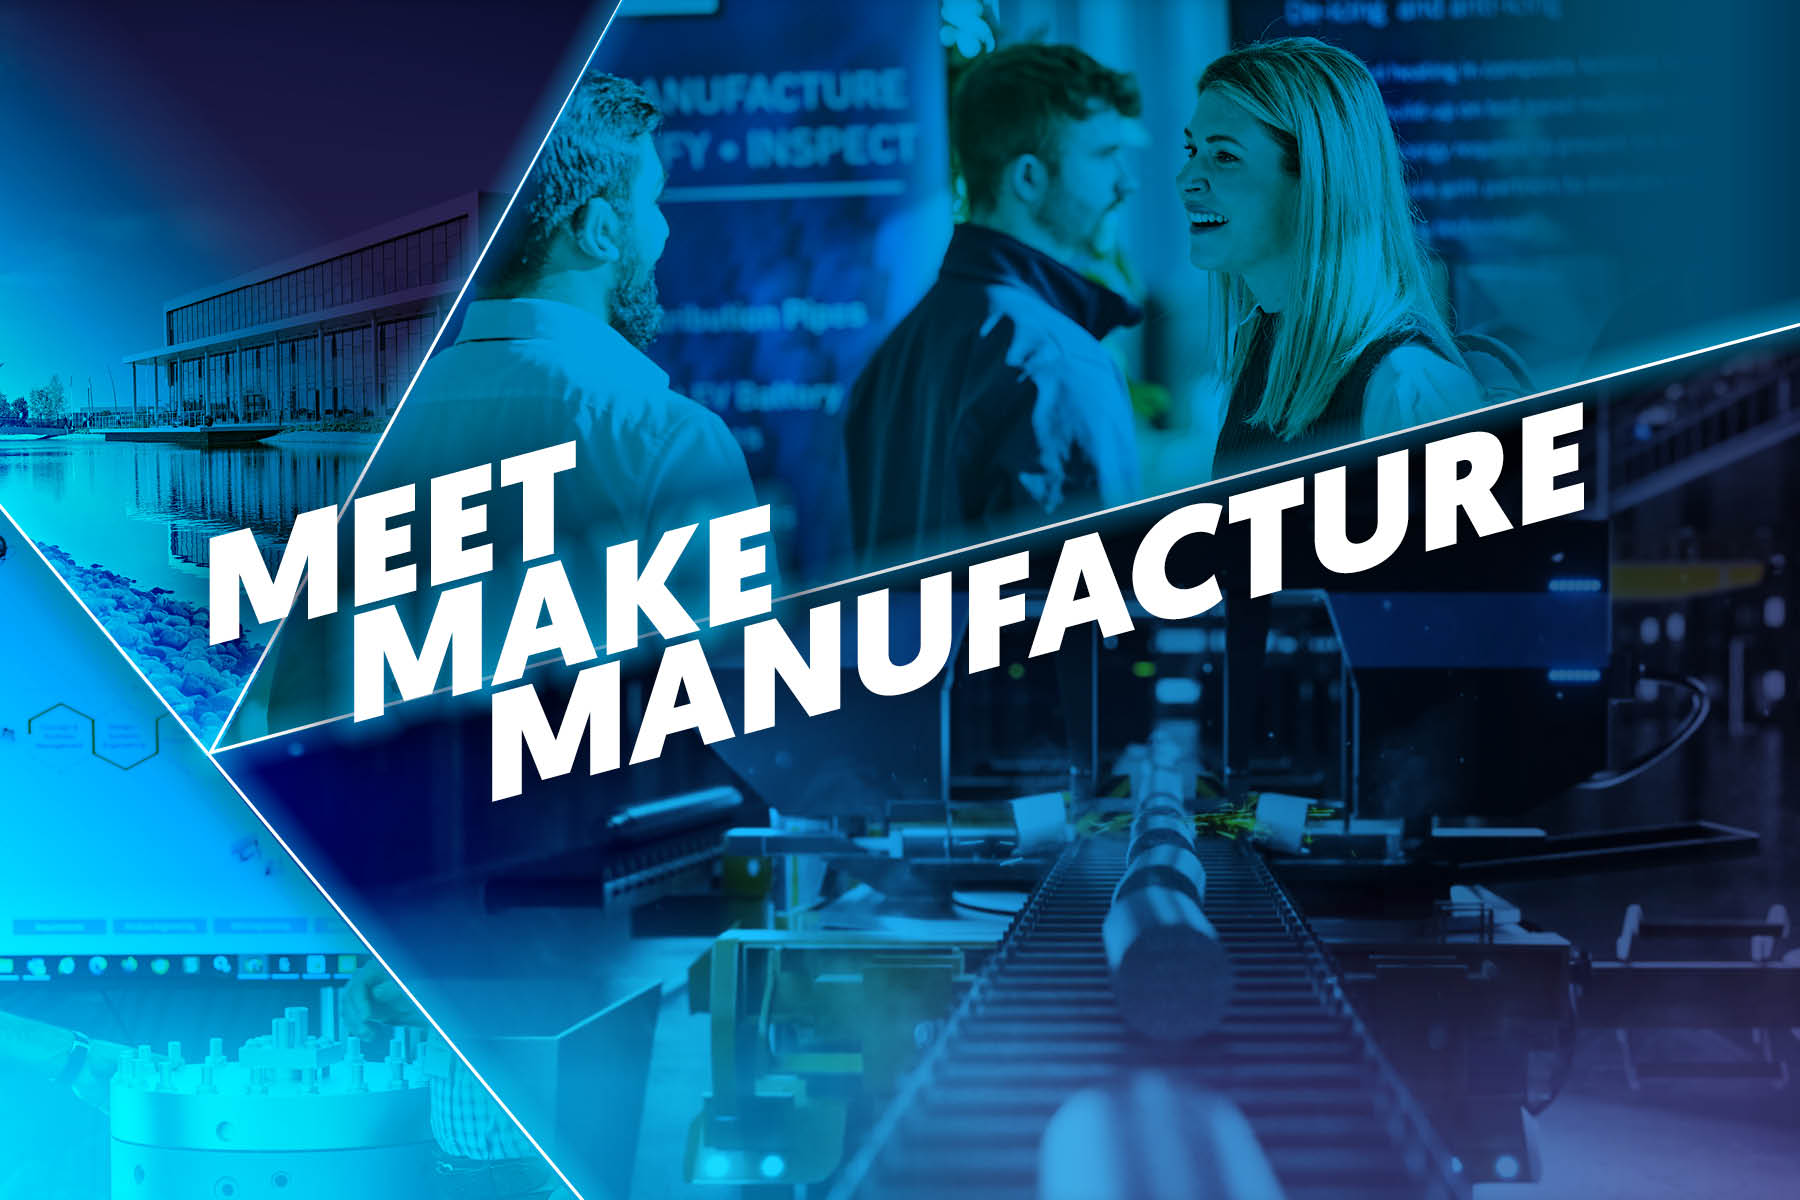 Meet Make Manufacture